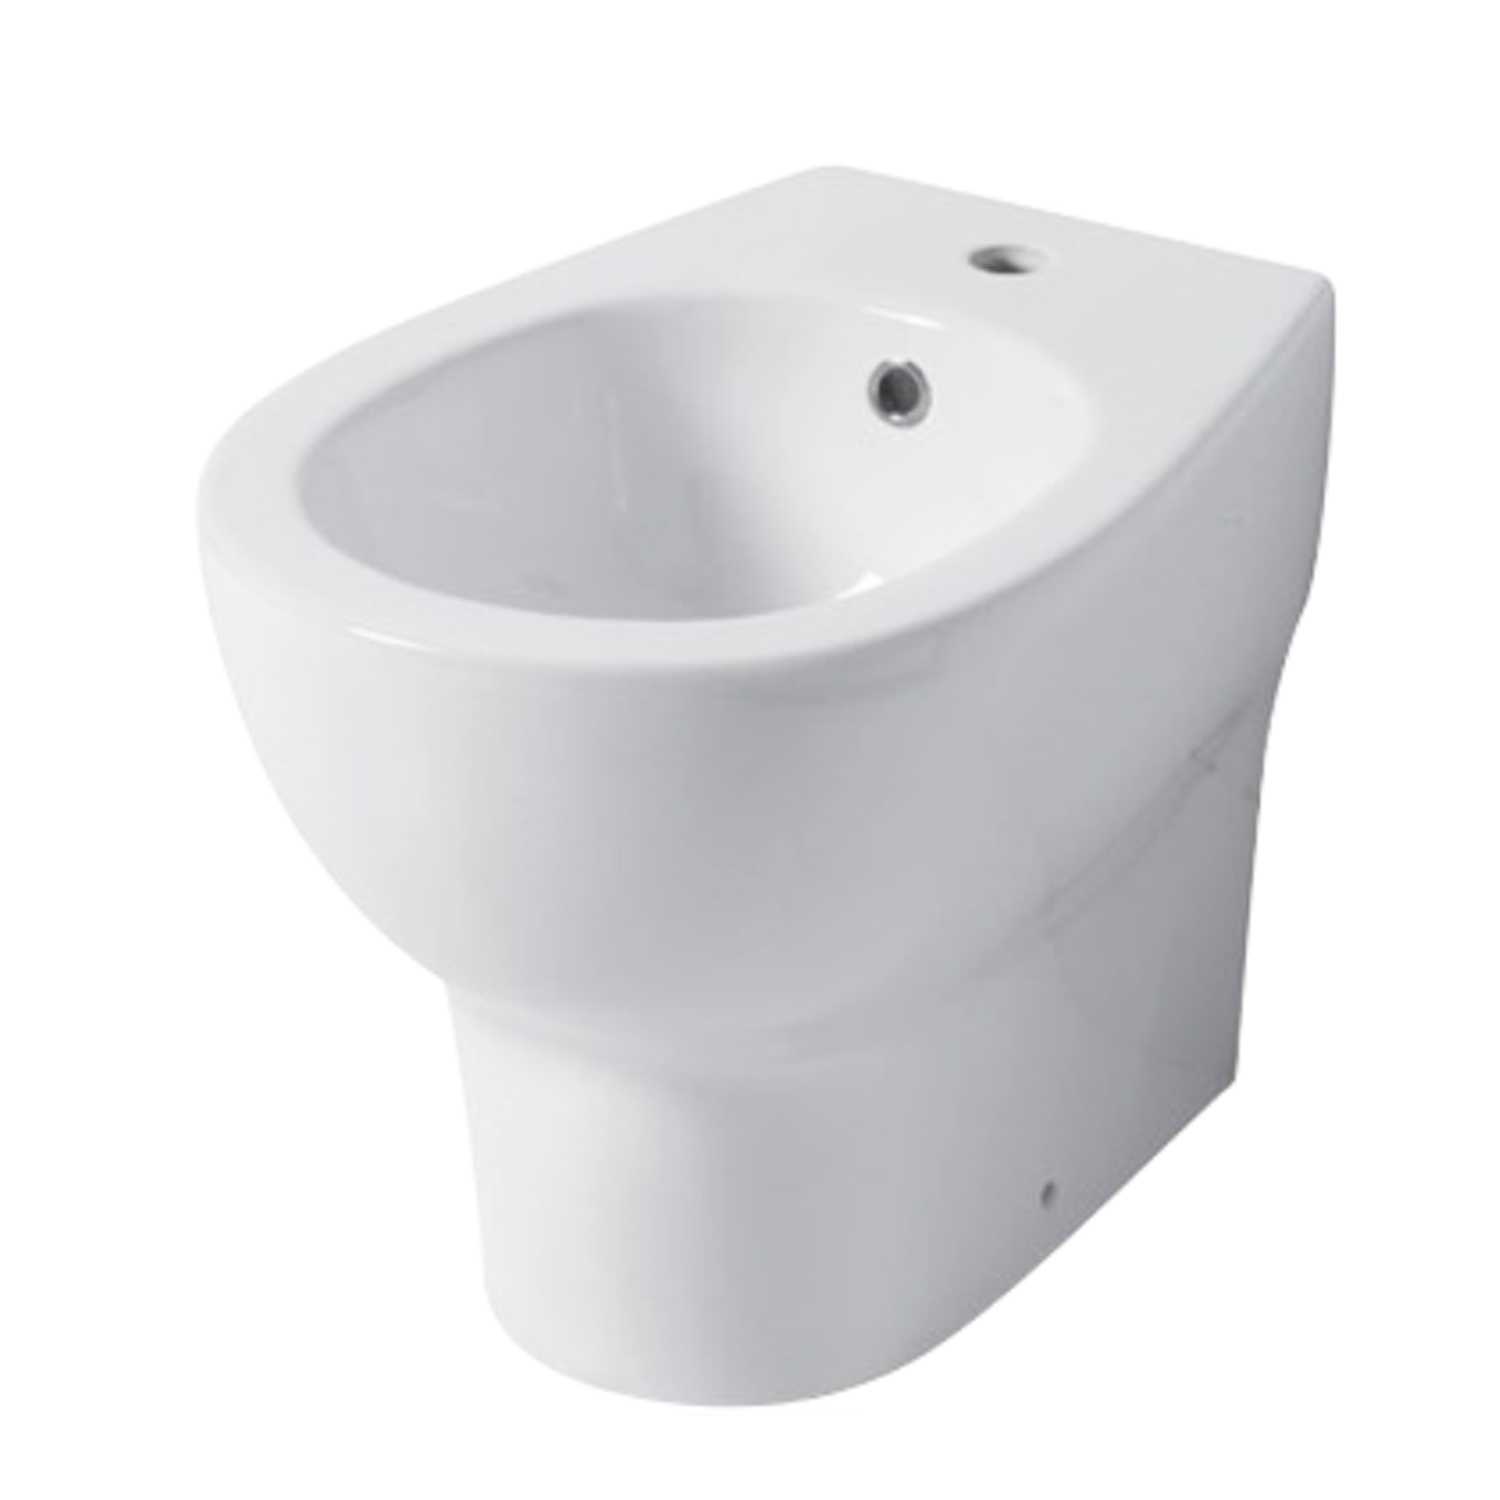 Bidet filomuro serie Touch 53 in ceramica bianca lucida - Disegno Ceramica